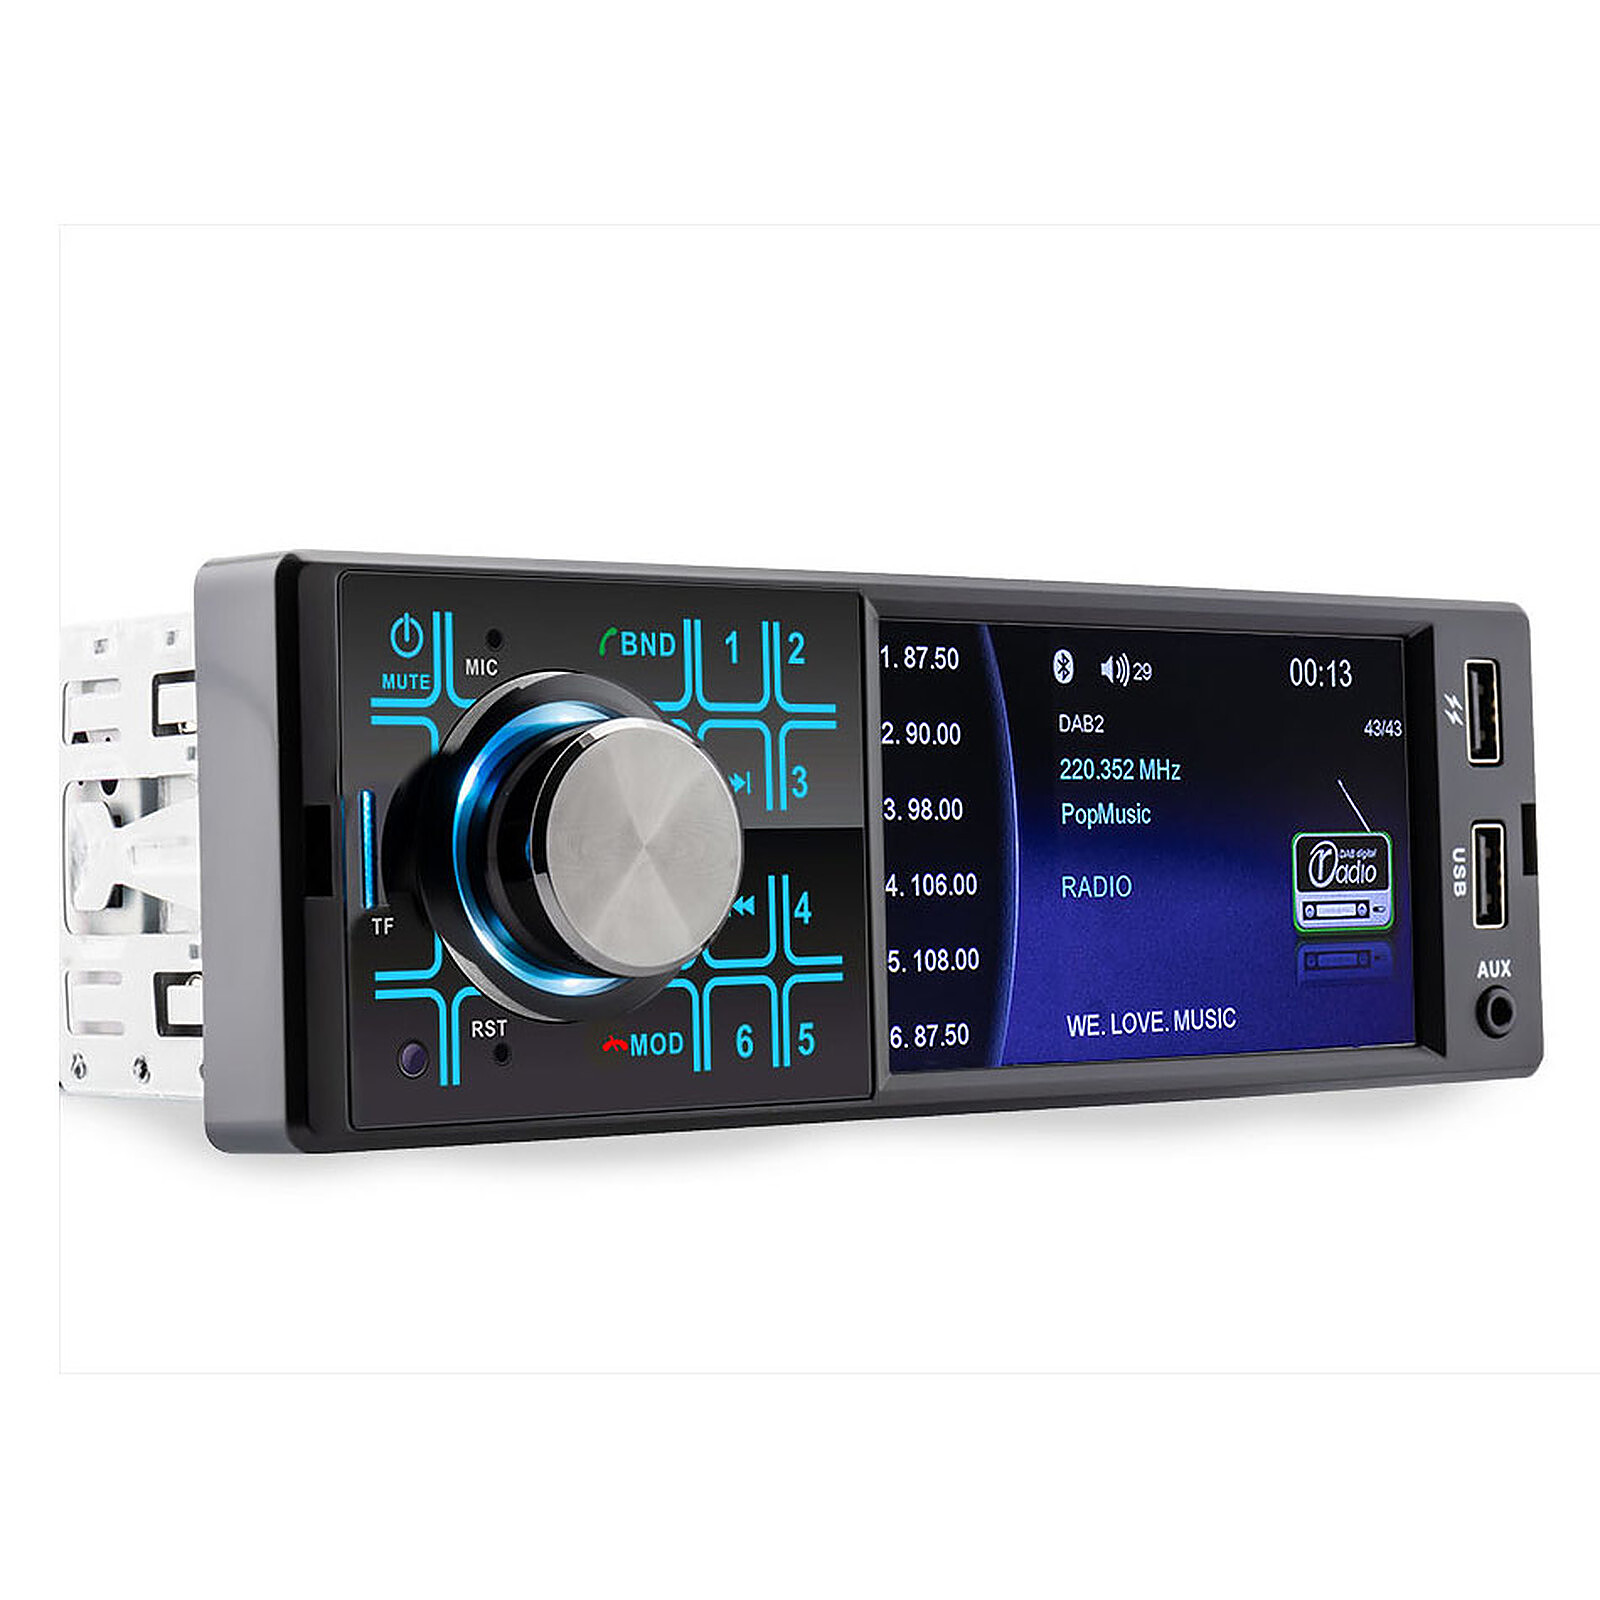 Caliber RMD404DAB-BT + CAM030 - Car stereo - LDLC 3-year warranty